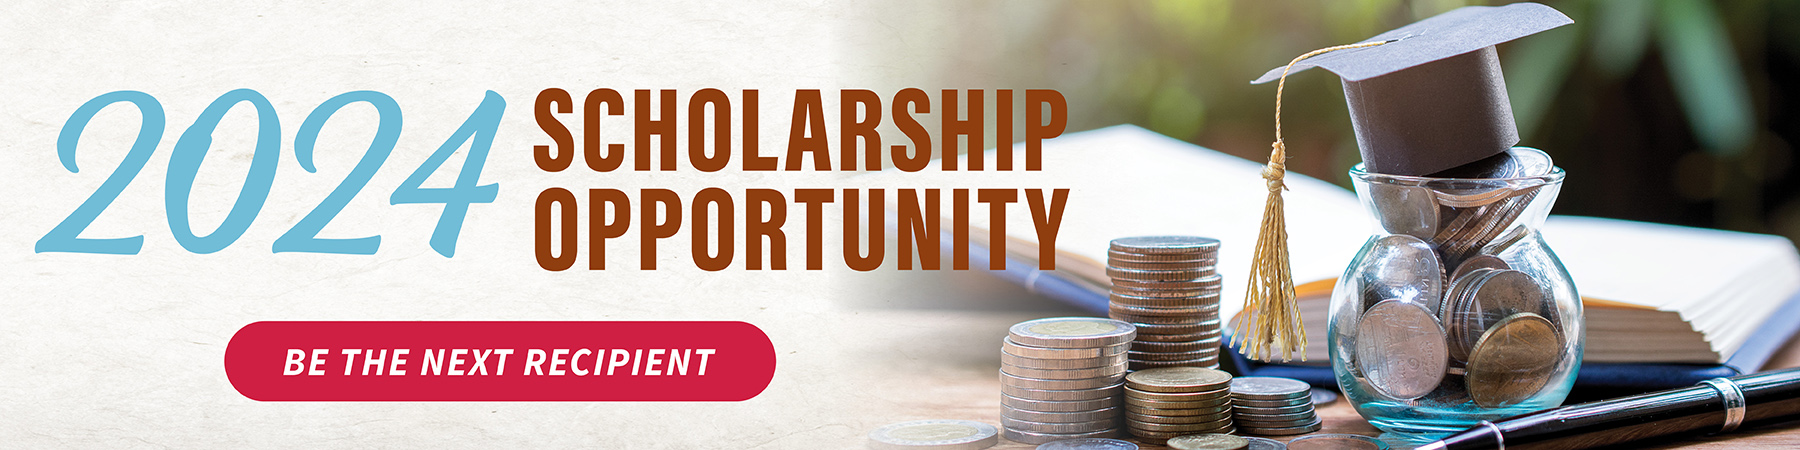 2024 MTFCU Scholarship Opportunity